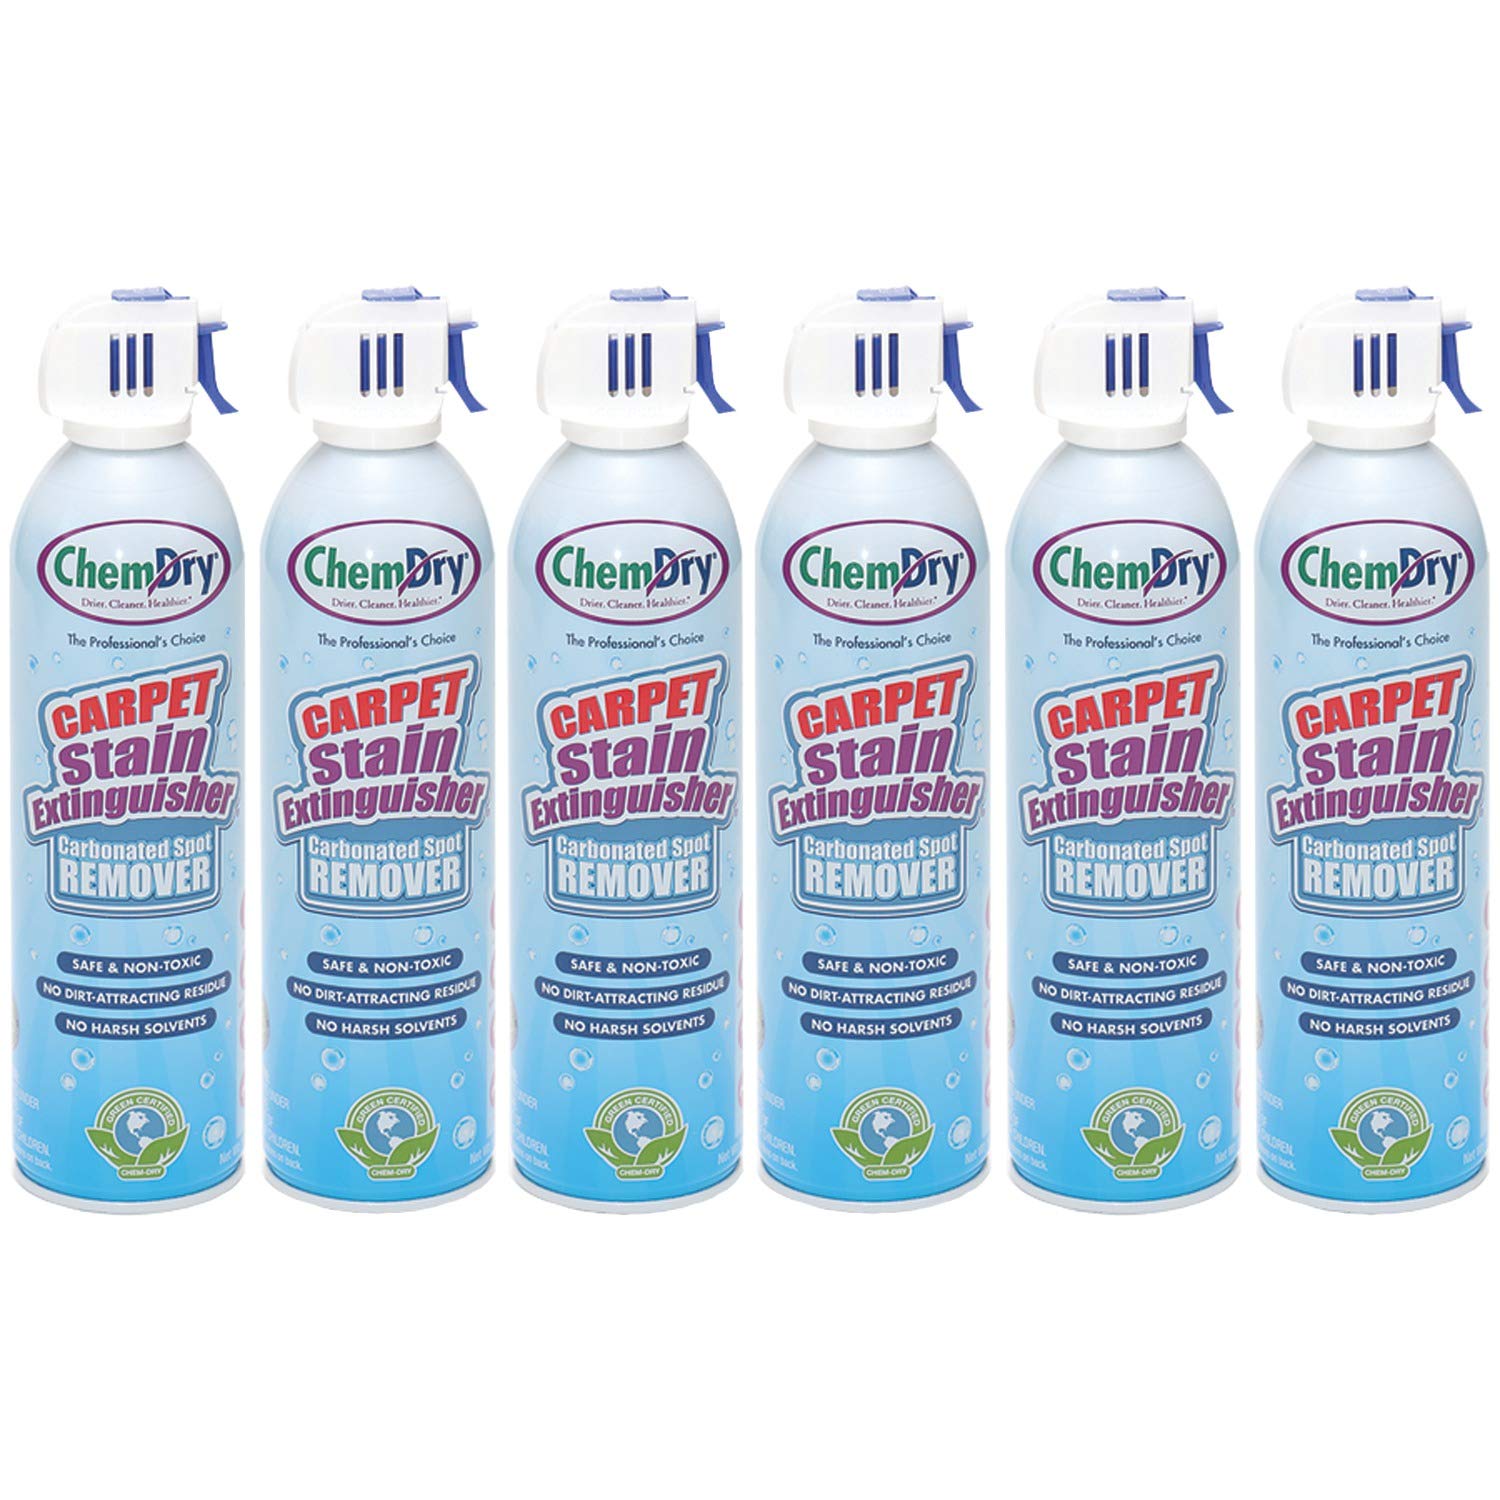 Chem-Dry Carpet Stain Extinguisher - 18 oz. - 6 pack